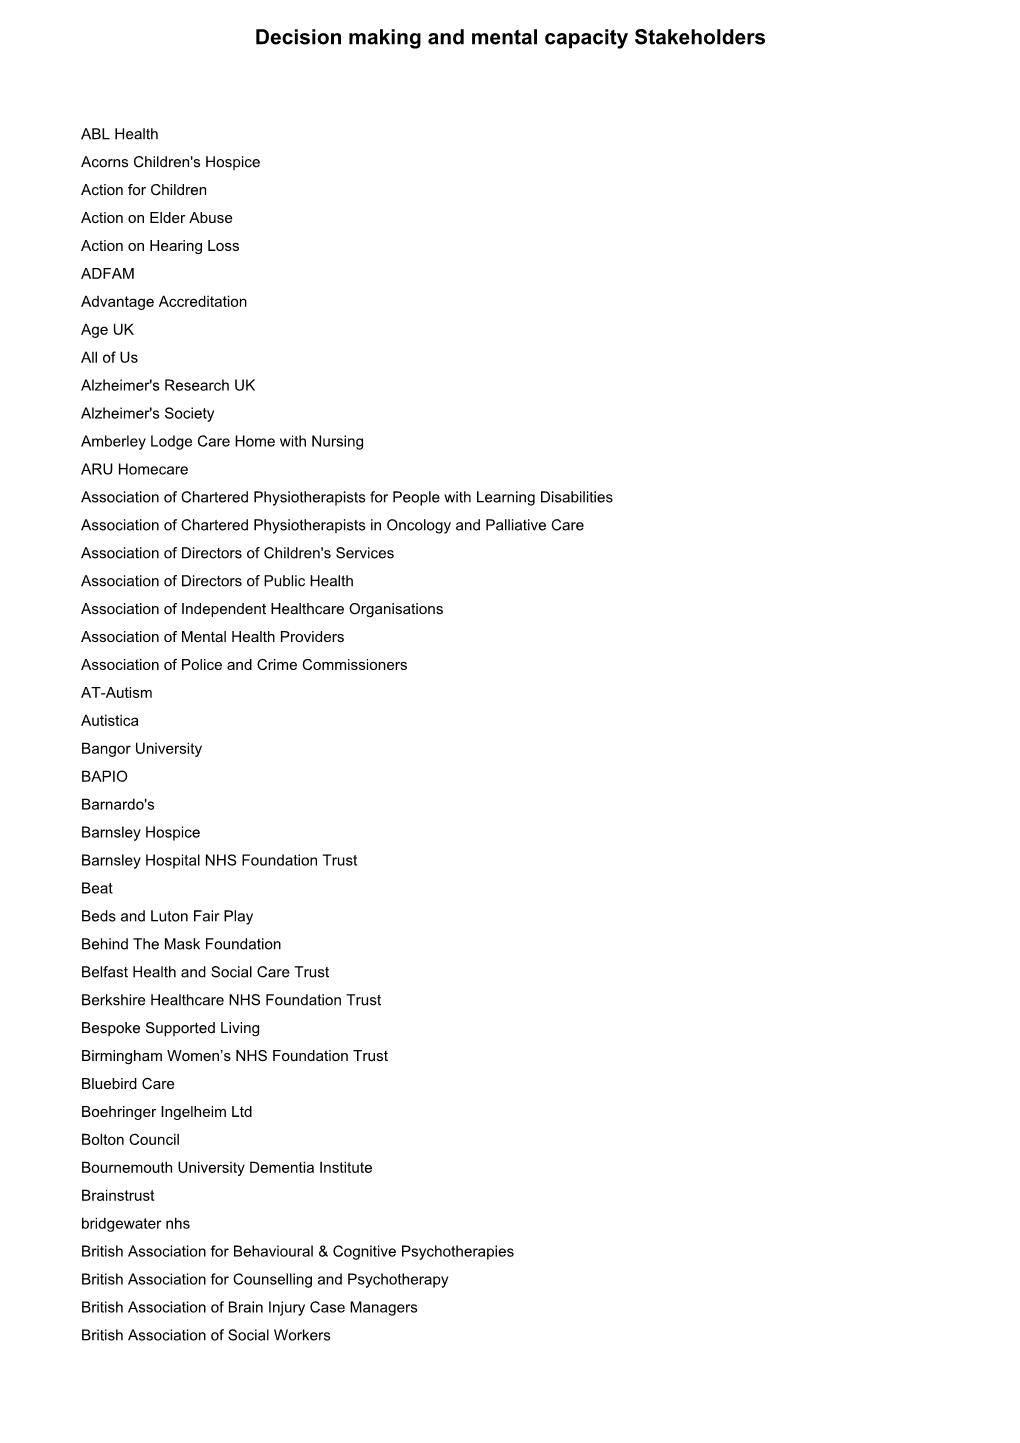 Stakeholder List PDF 47 KB